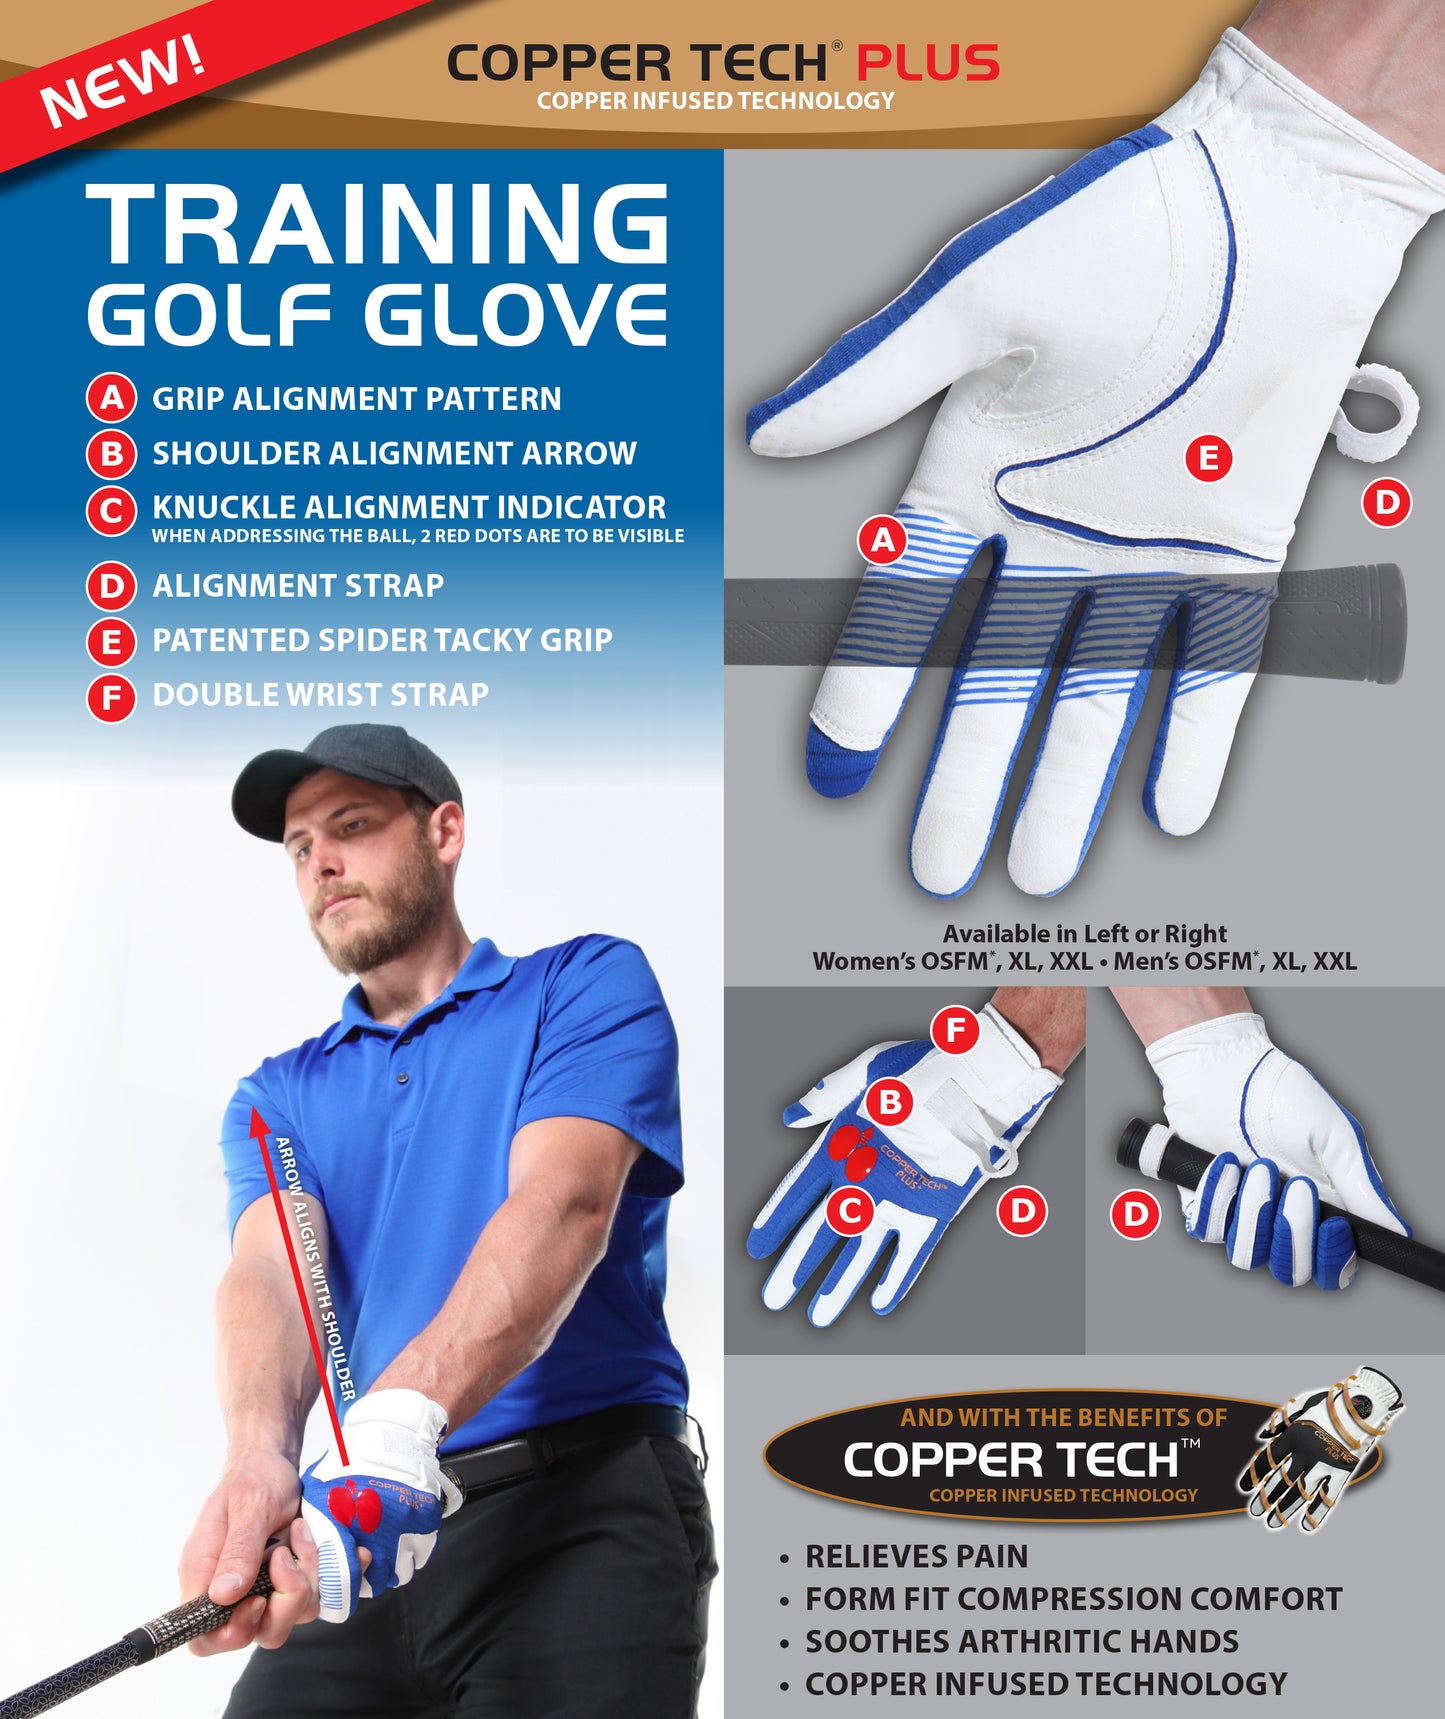 Copper Tech Plus Training Golf Glove